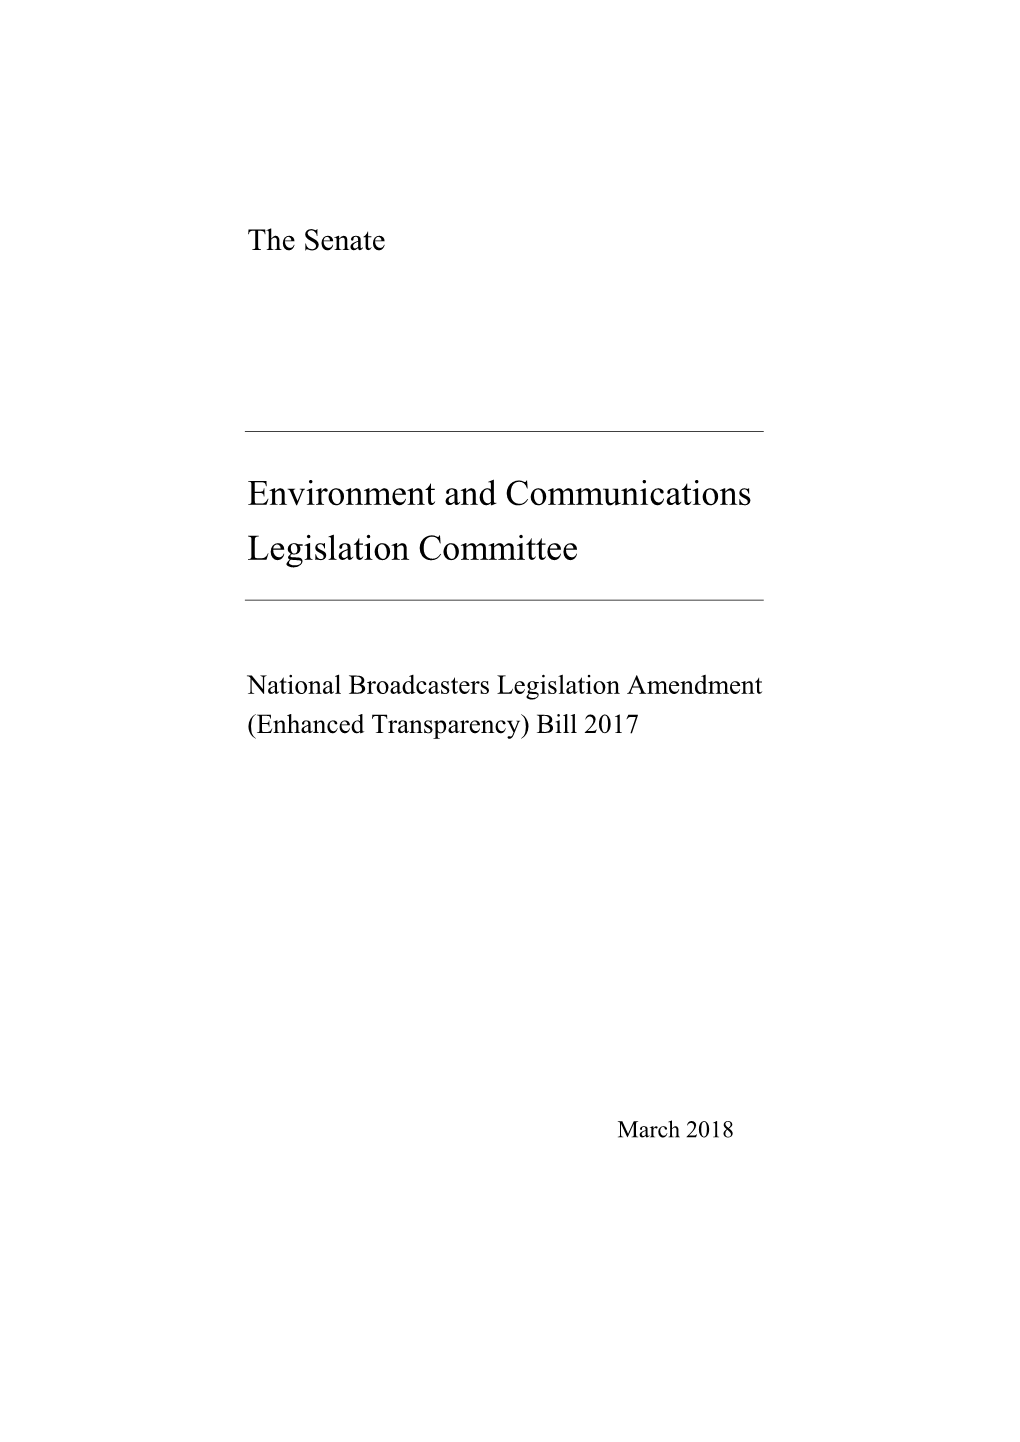 National Broadcasters Legislation Amendment (Enhanced Transparency) Bill 2017